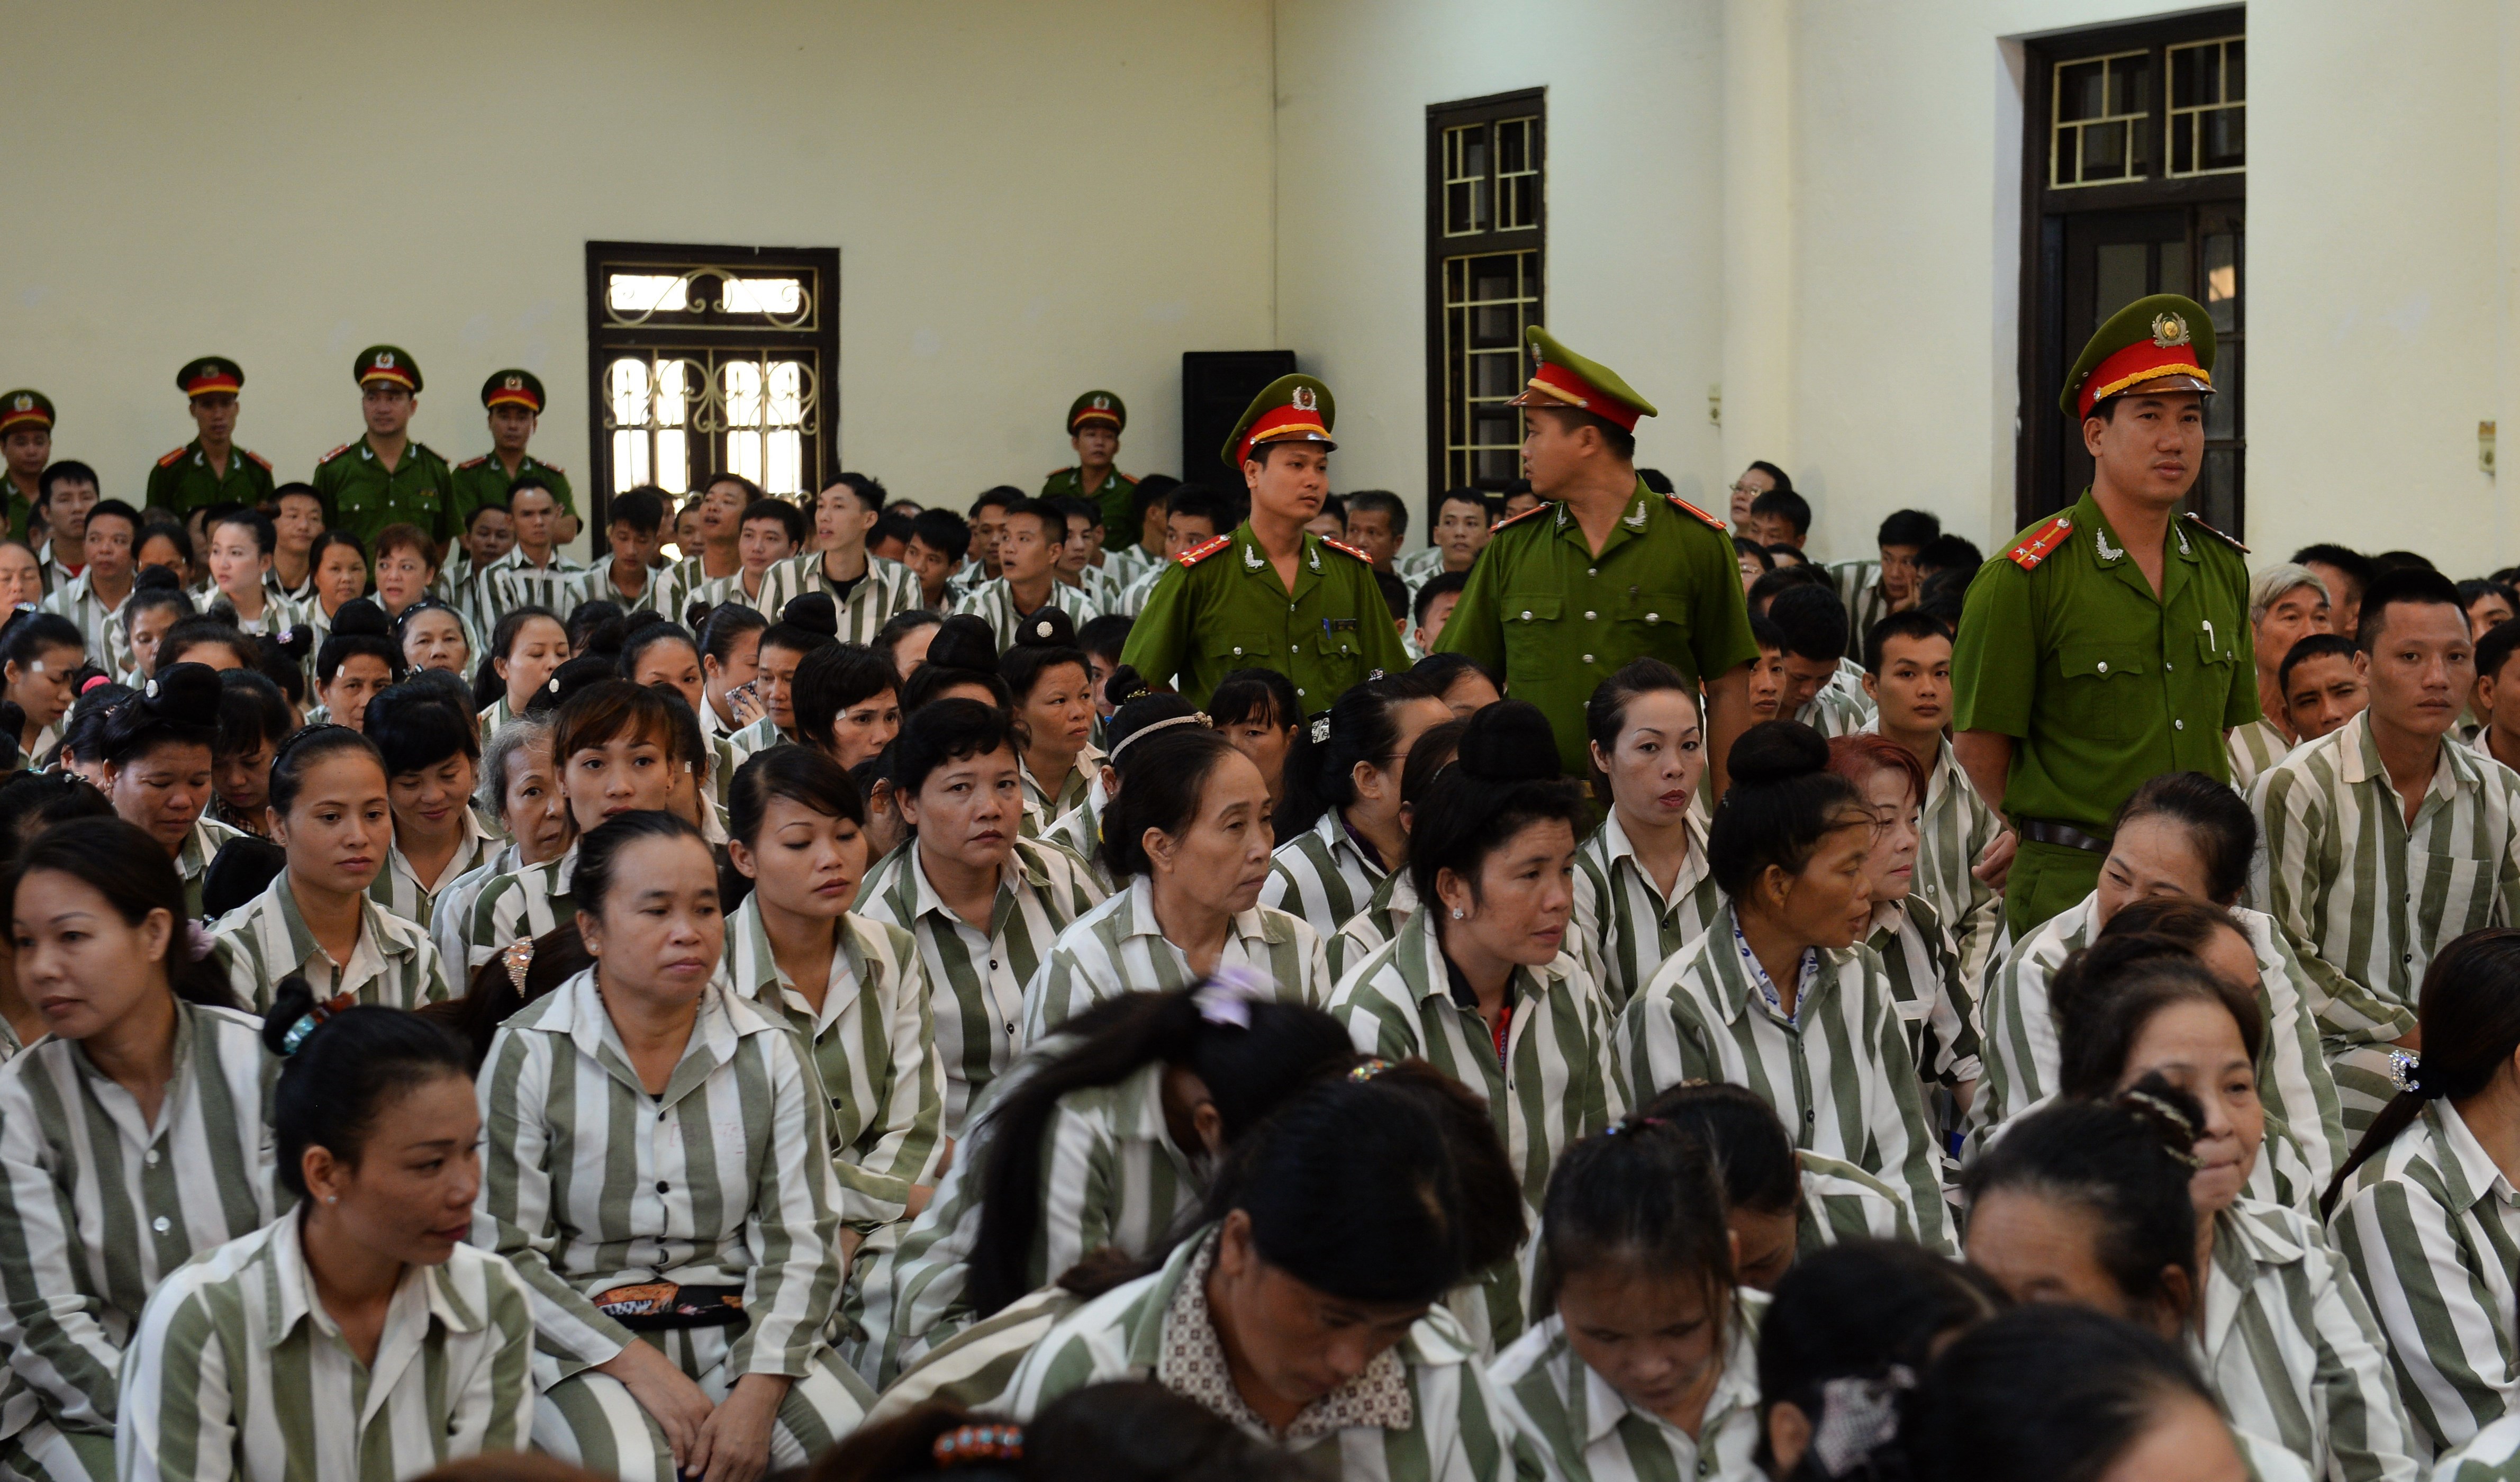 тюрьма во вьетнаме